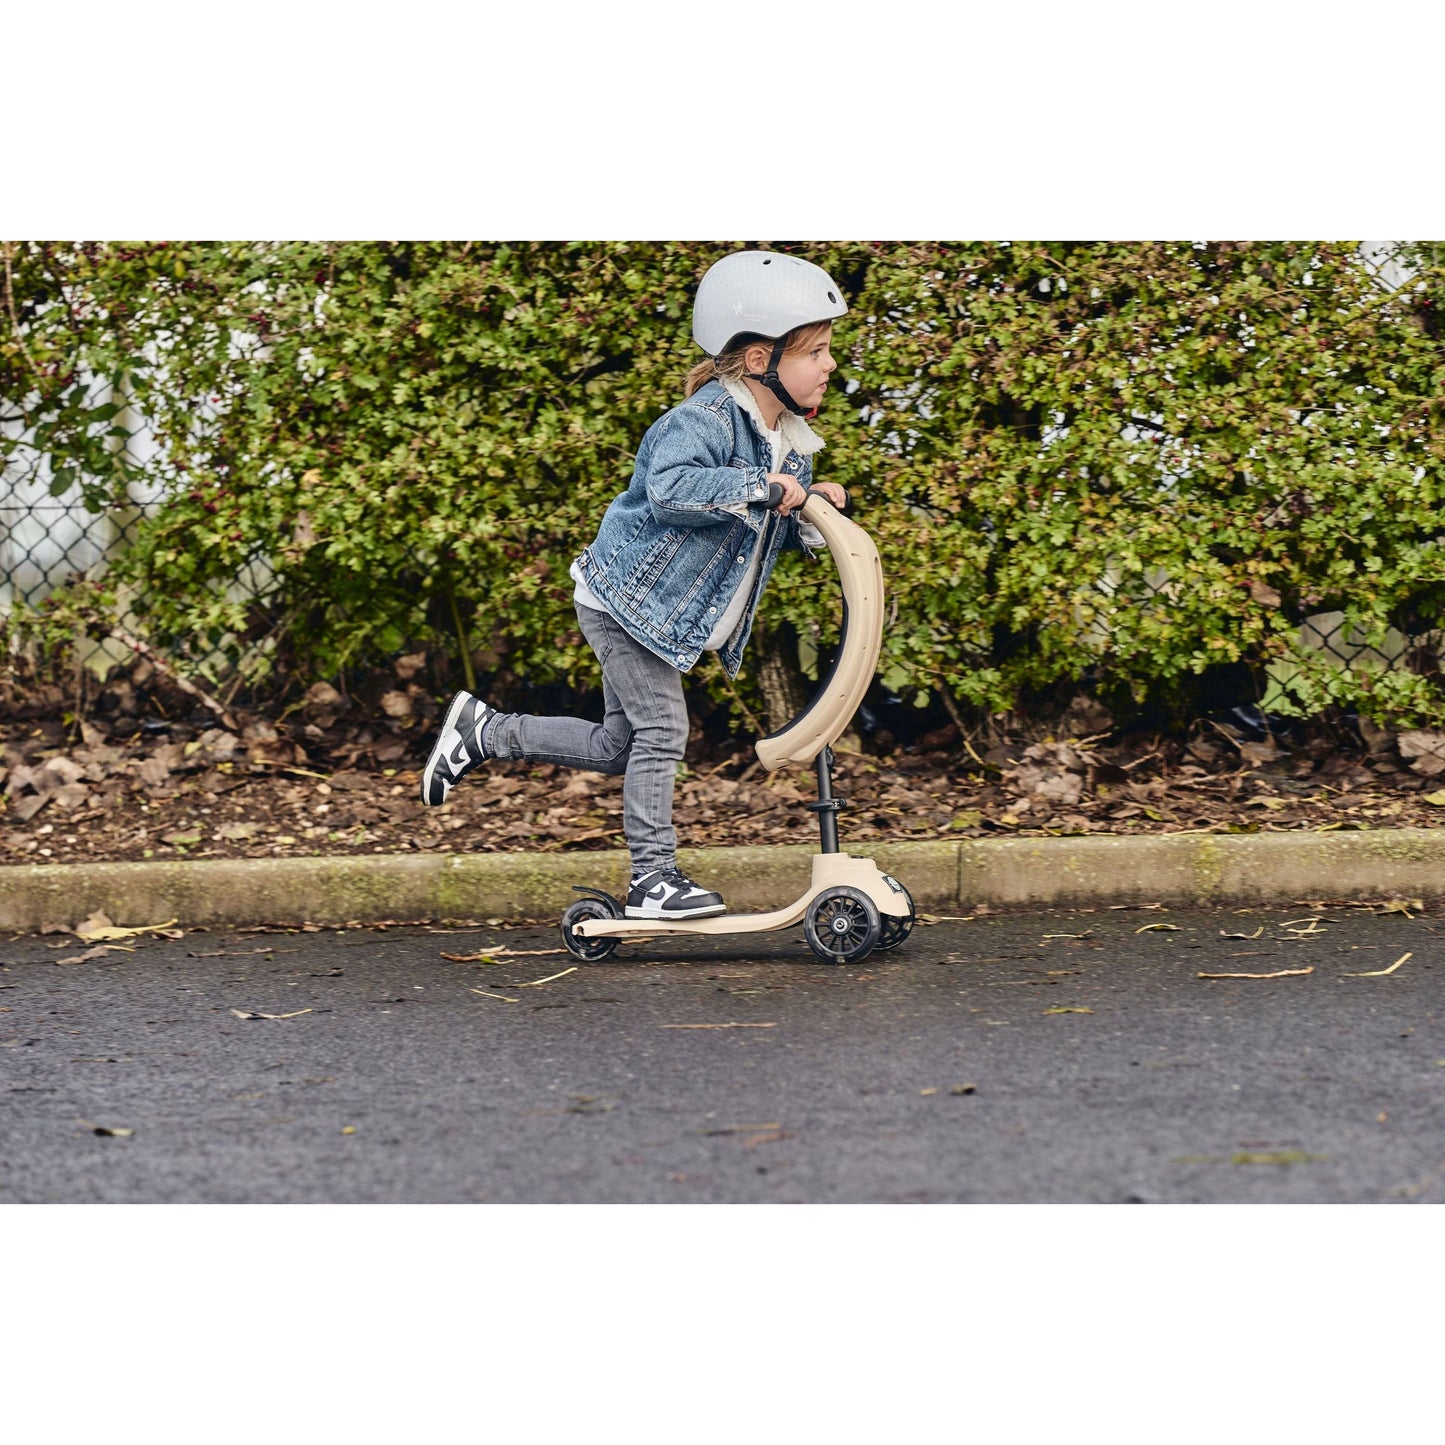 child riding Ride-Ezy Kick & Go Scooter - Sandy side